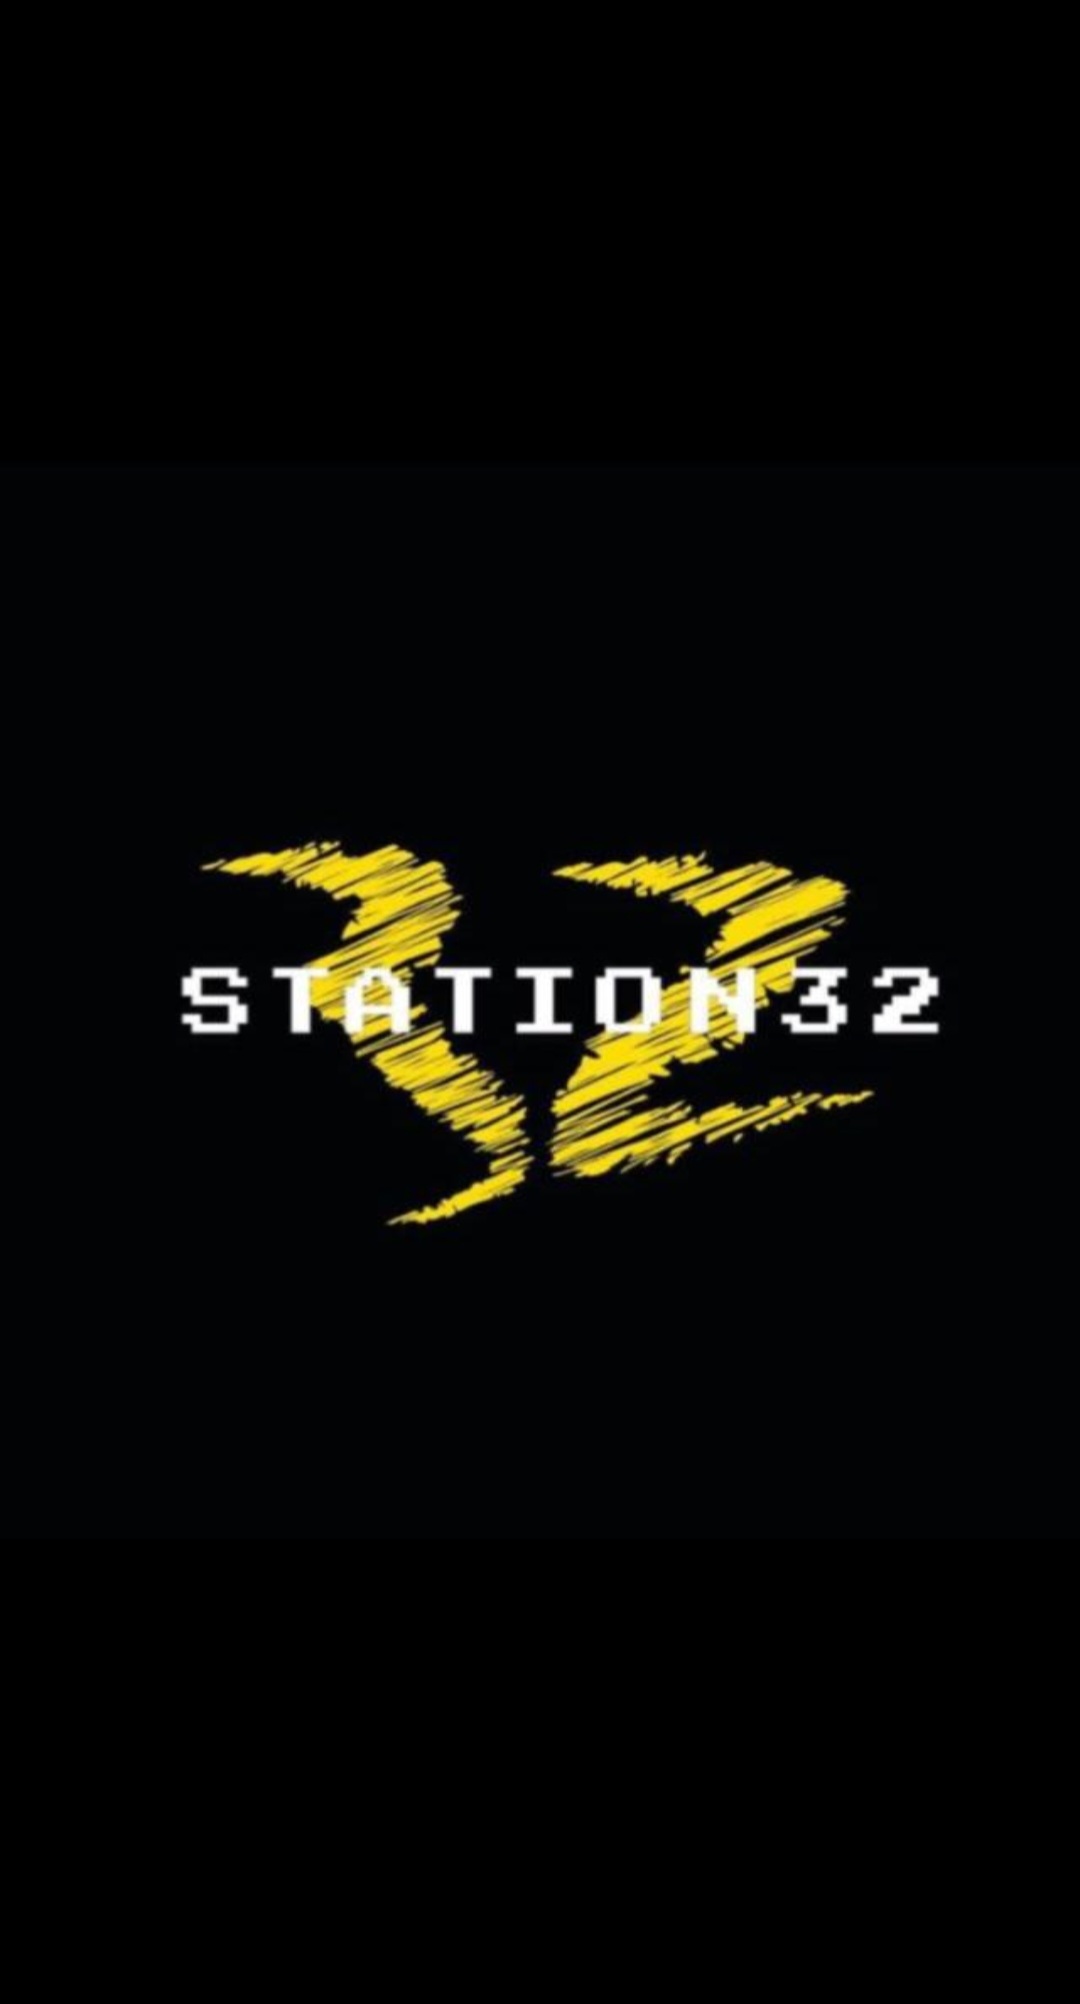 Station 32